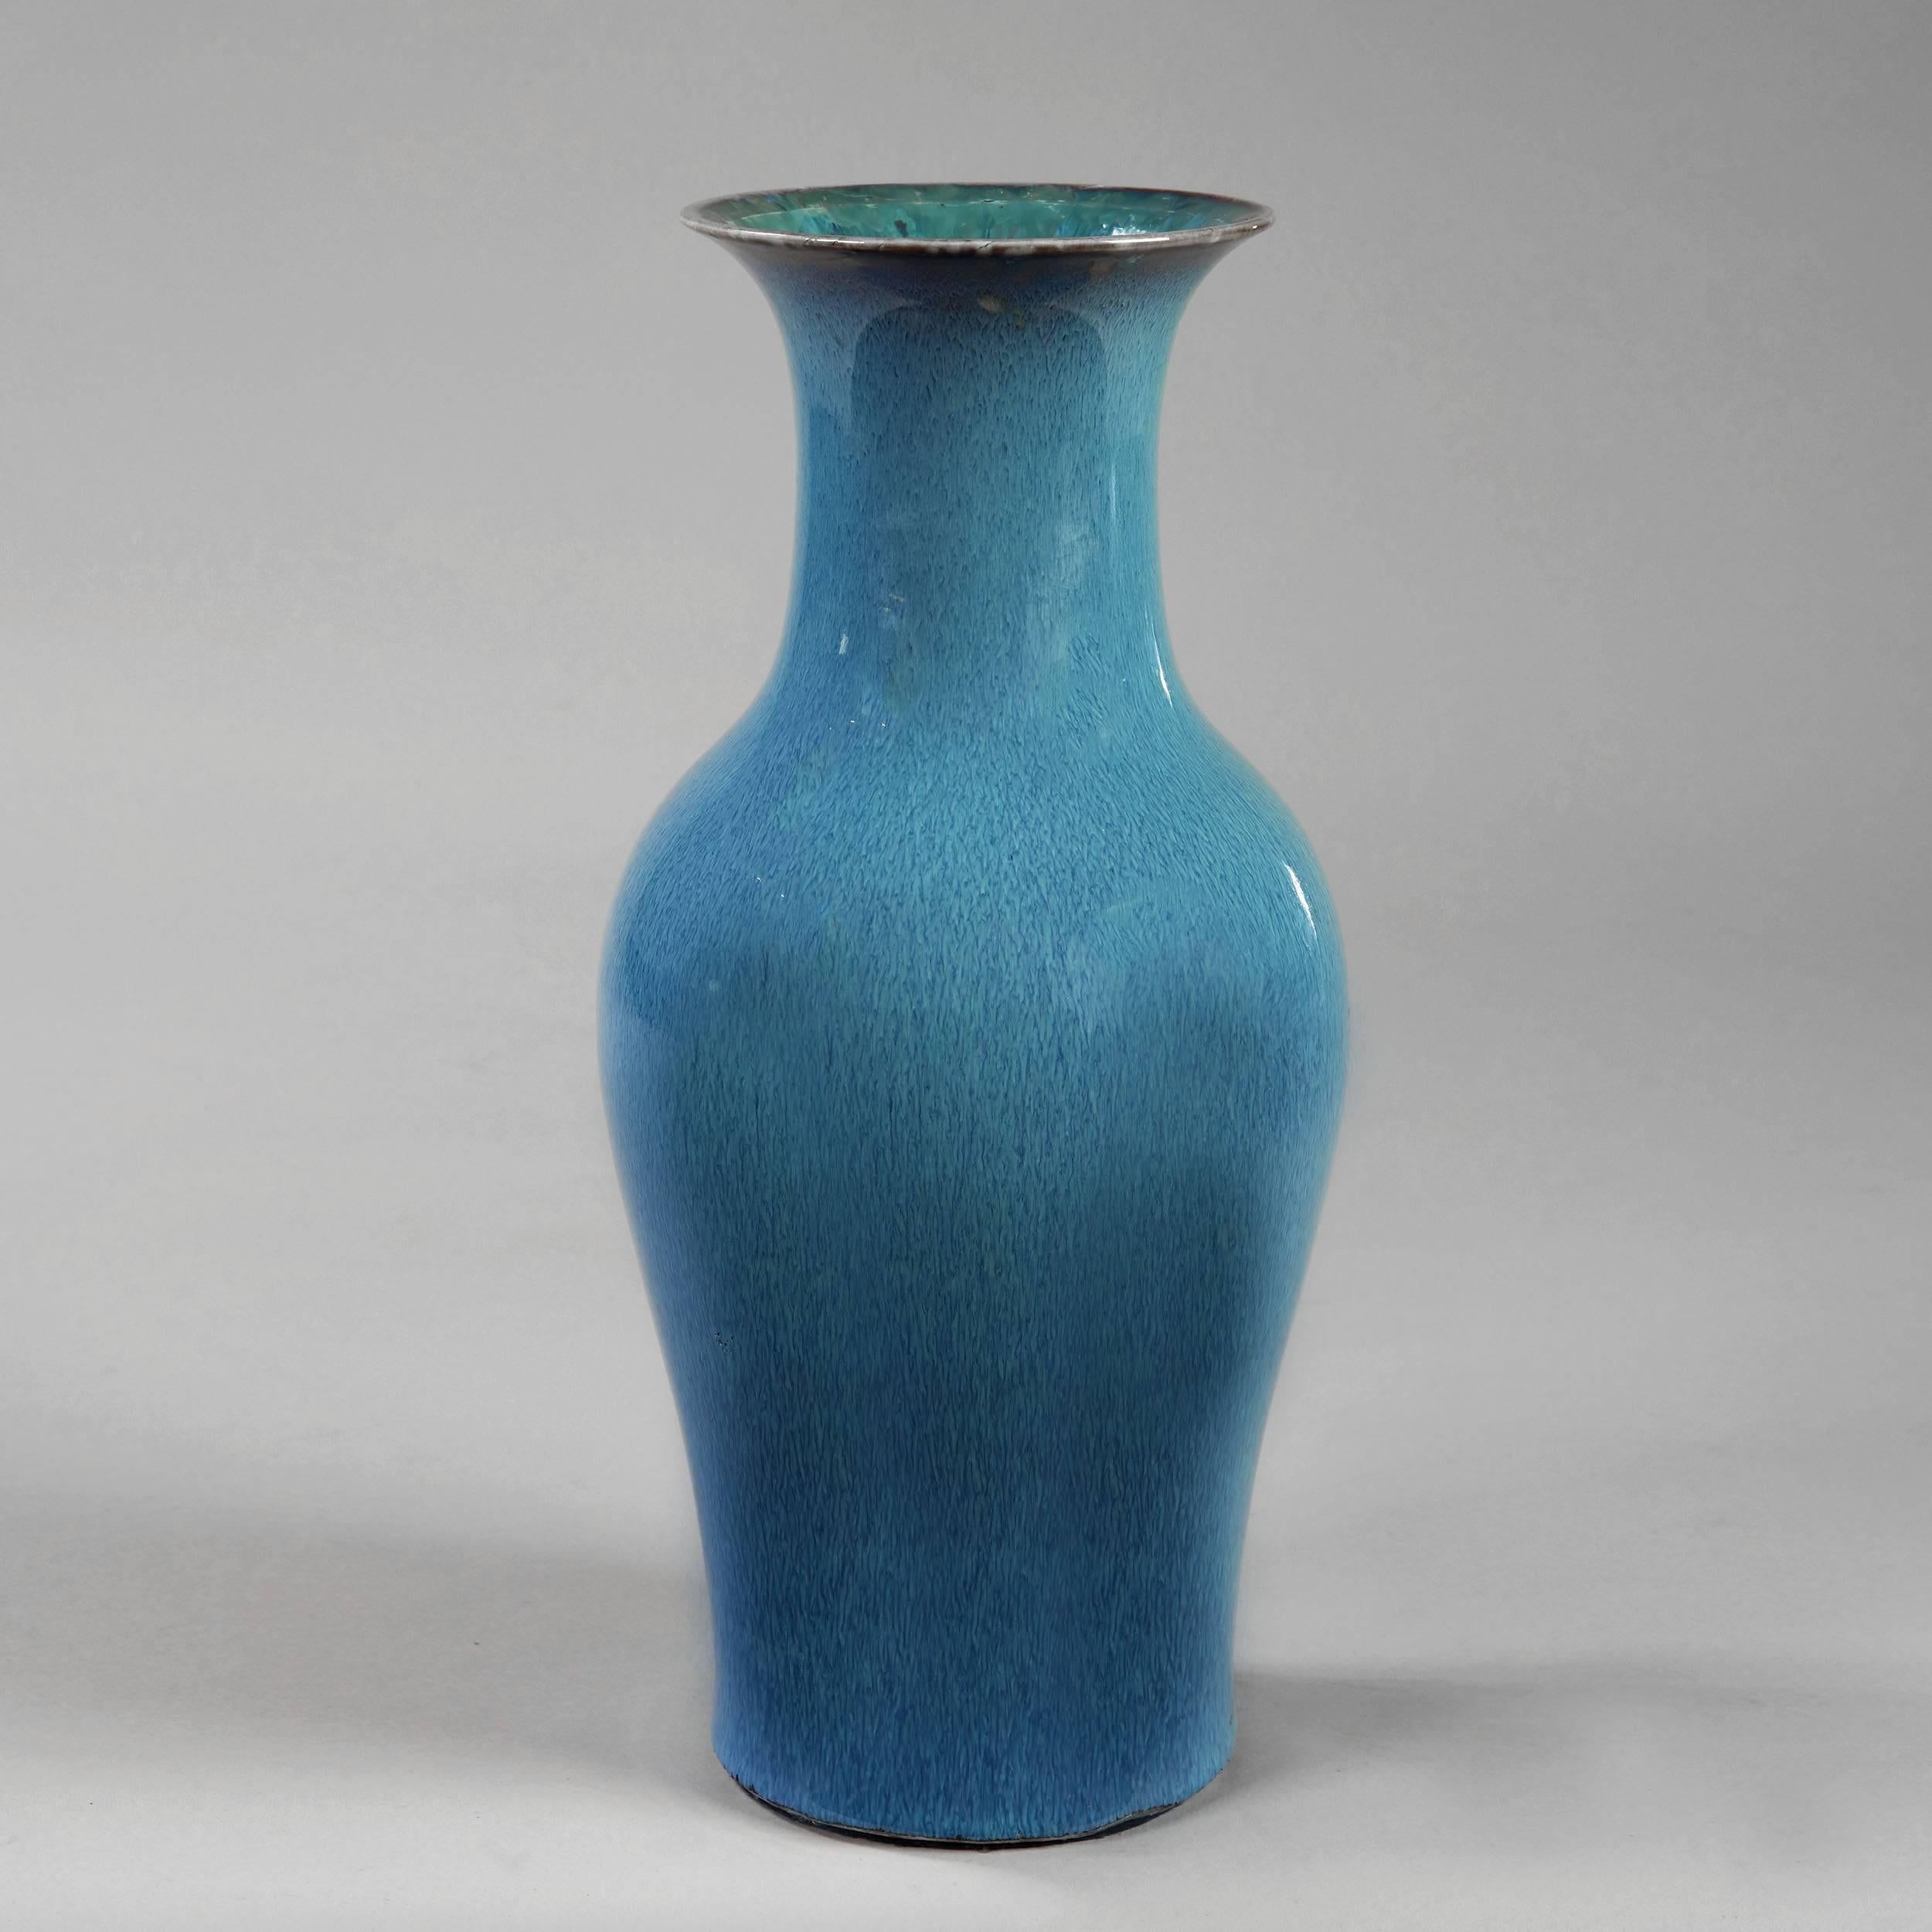 An early 20th century bird’s-eye blue glaze baluster vase.